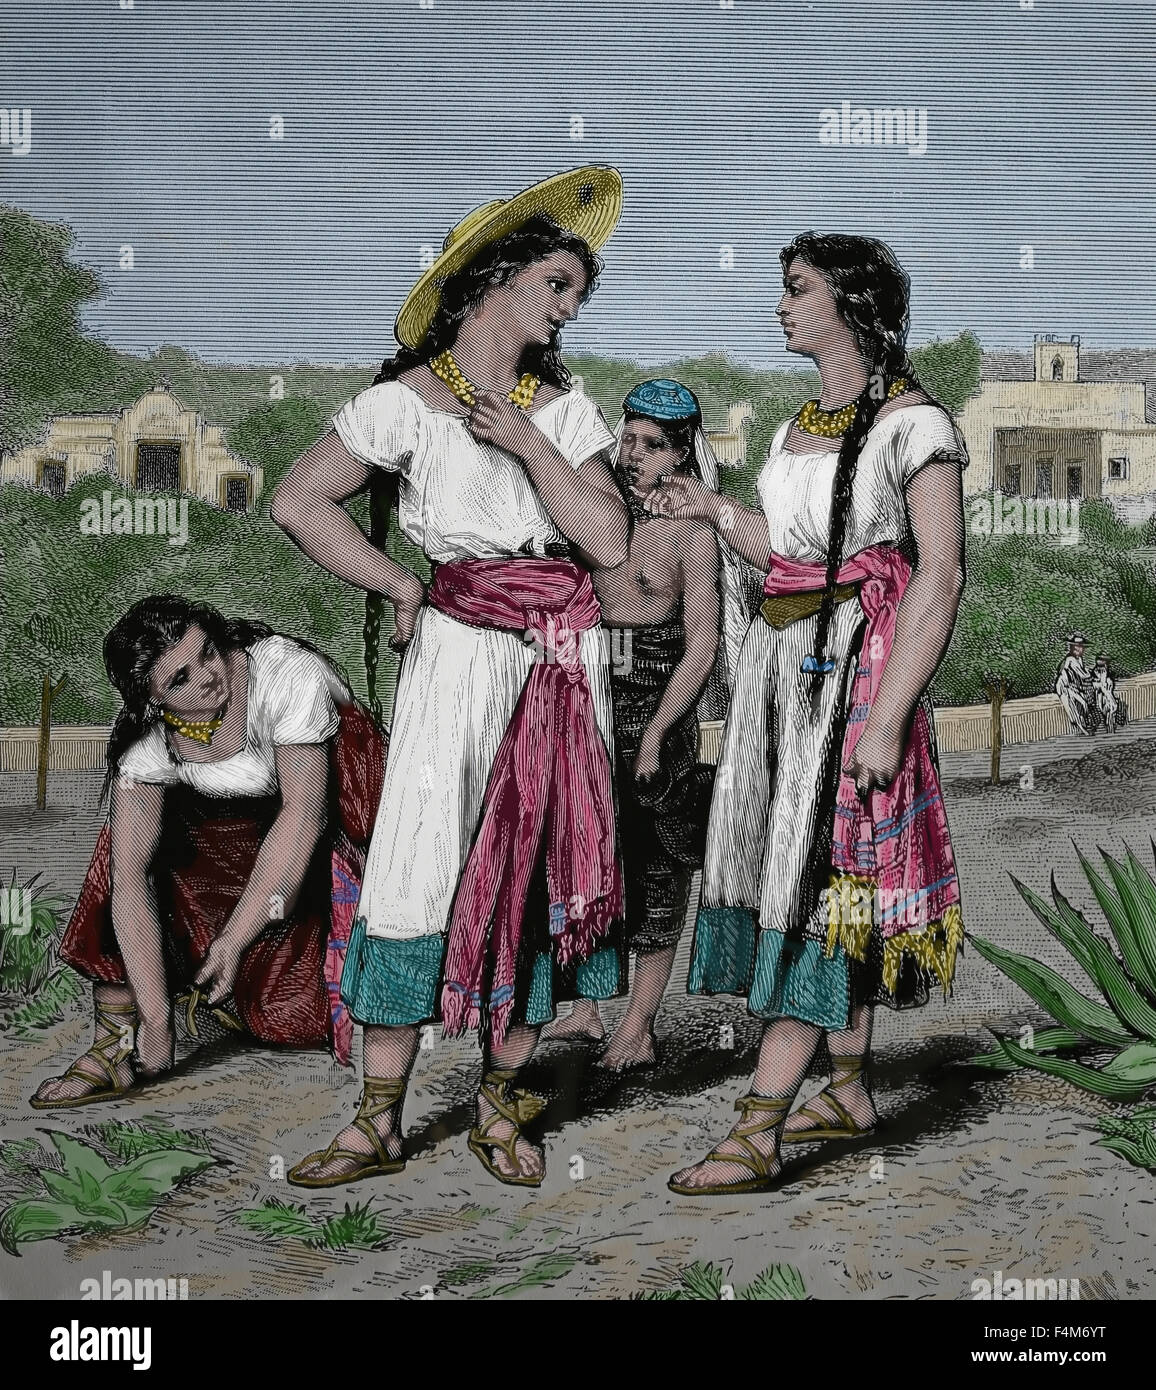 América. México. Chiapas. Las niñas de Tuxtla, c. 1875. Grabado del siglo XIX. Foto de stock